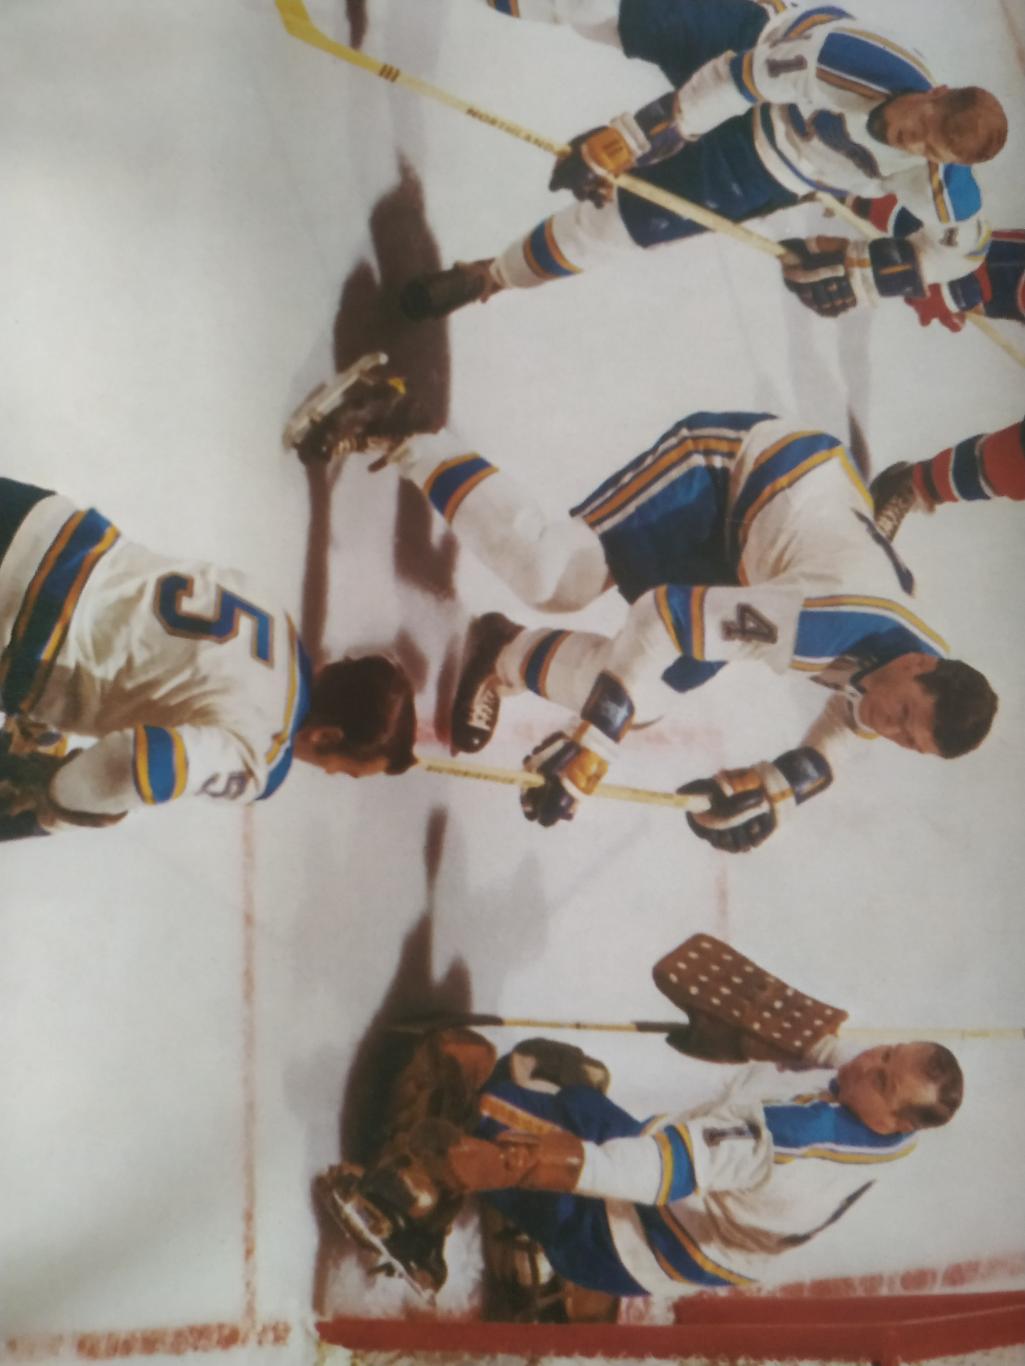 ПРОГРАММА МАТЧА НХЛ ТОРОНТО NHL 1968 DEC.26 TORONTO VS. CANADIENS PROGRAM GAME 7